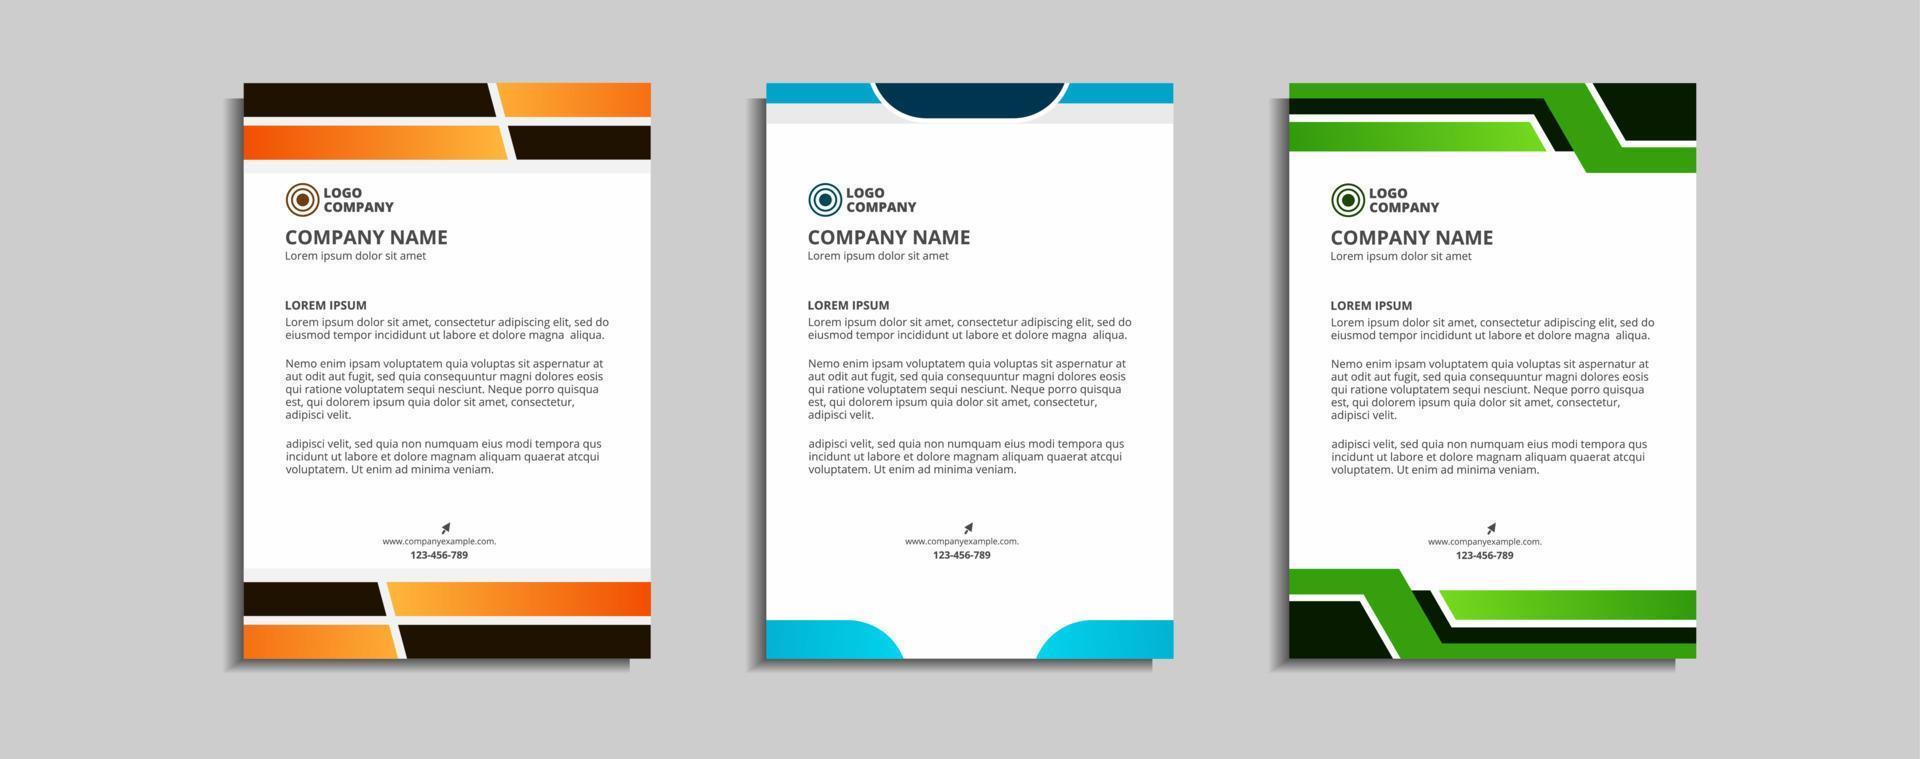 modern corporate letterhead template design vector